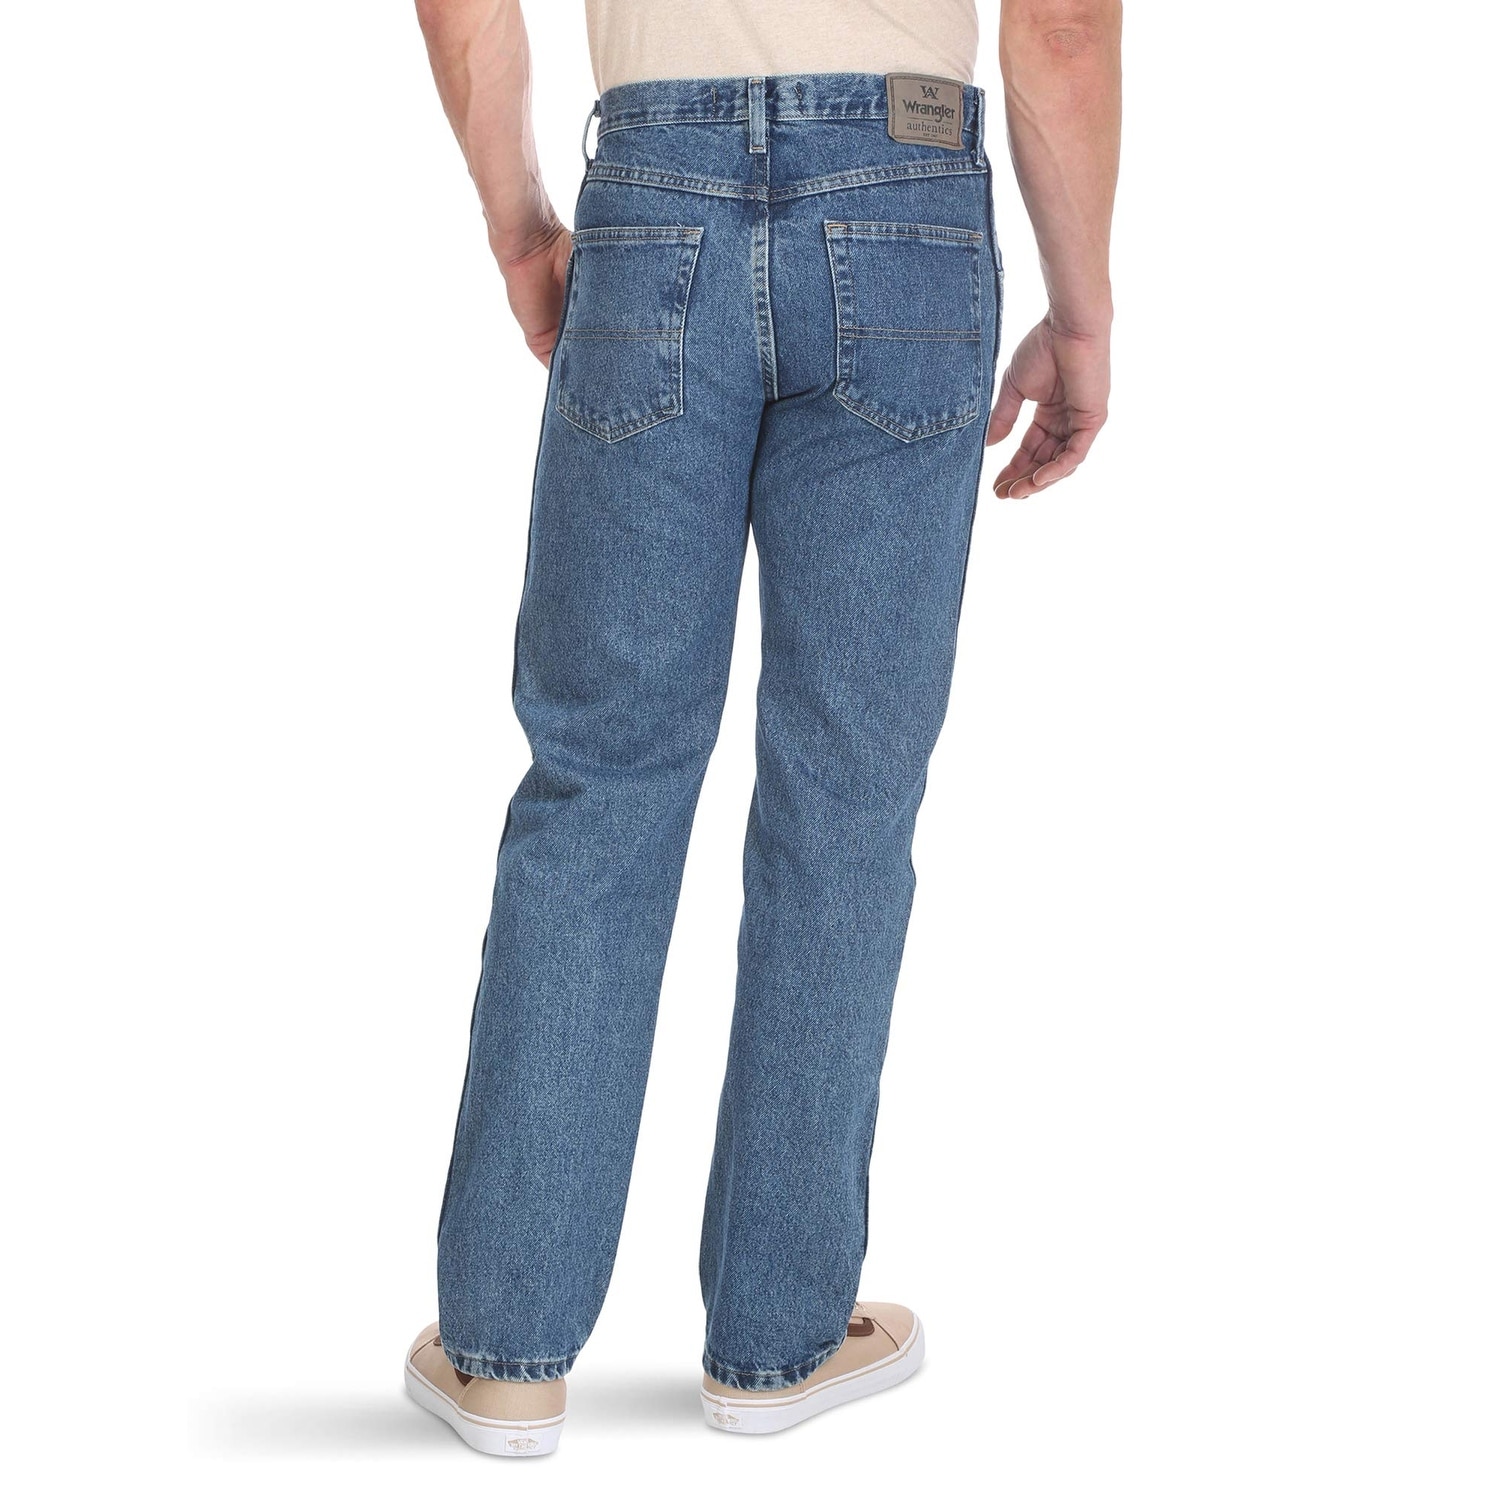 33x29 mens jeans